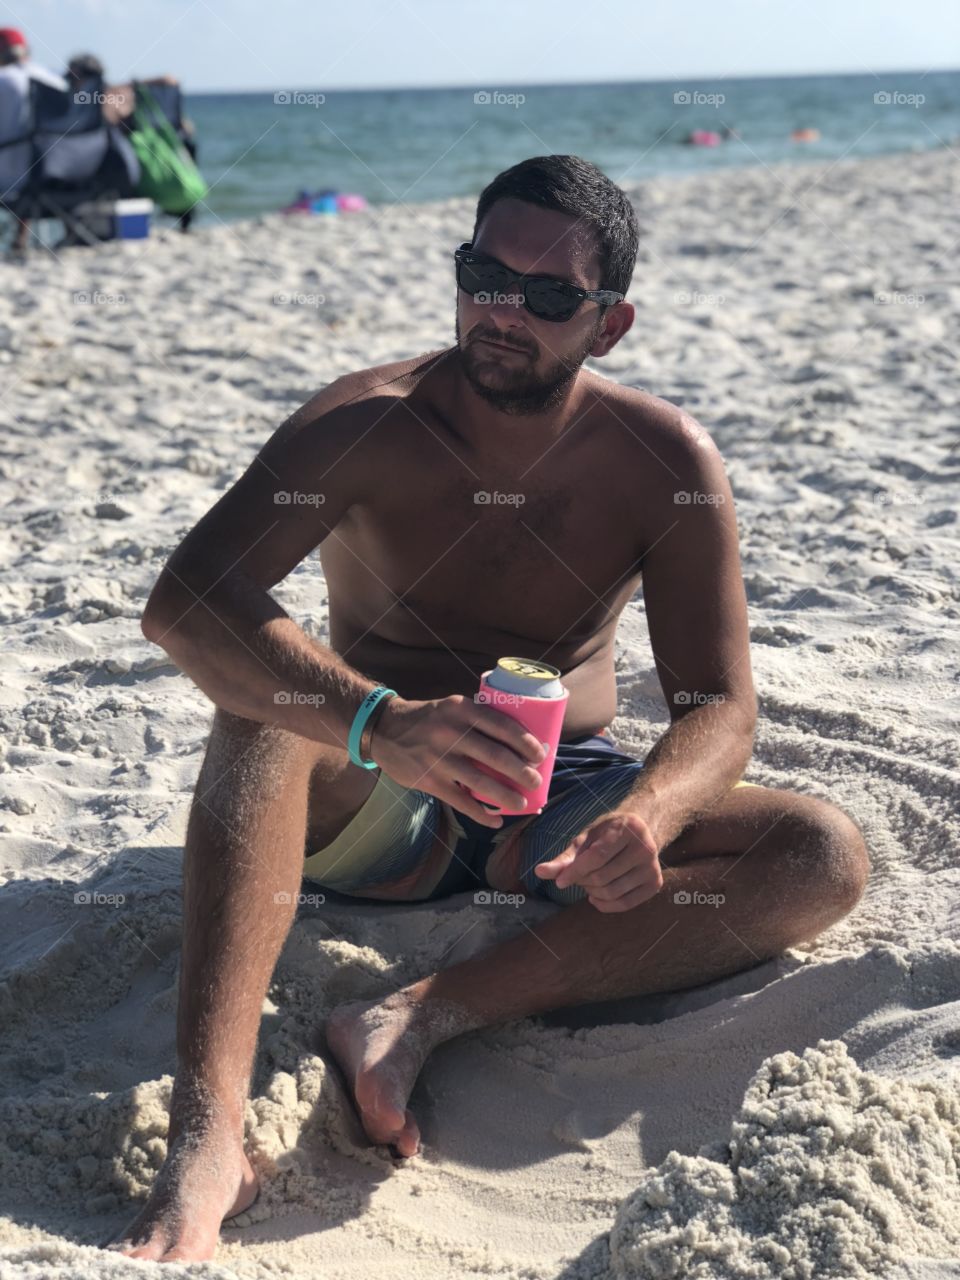 Boy. Beach. Beer. Alabama beaches in the summertime 